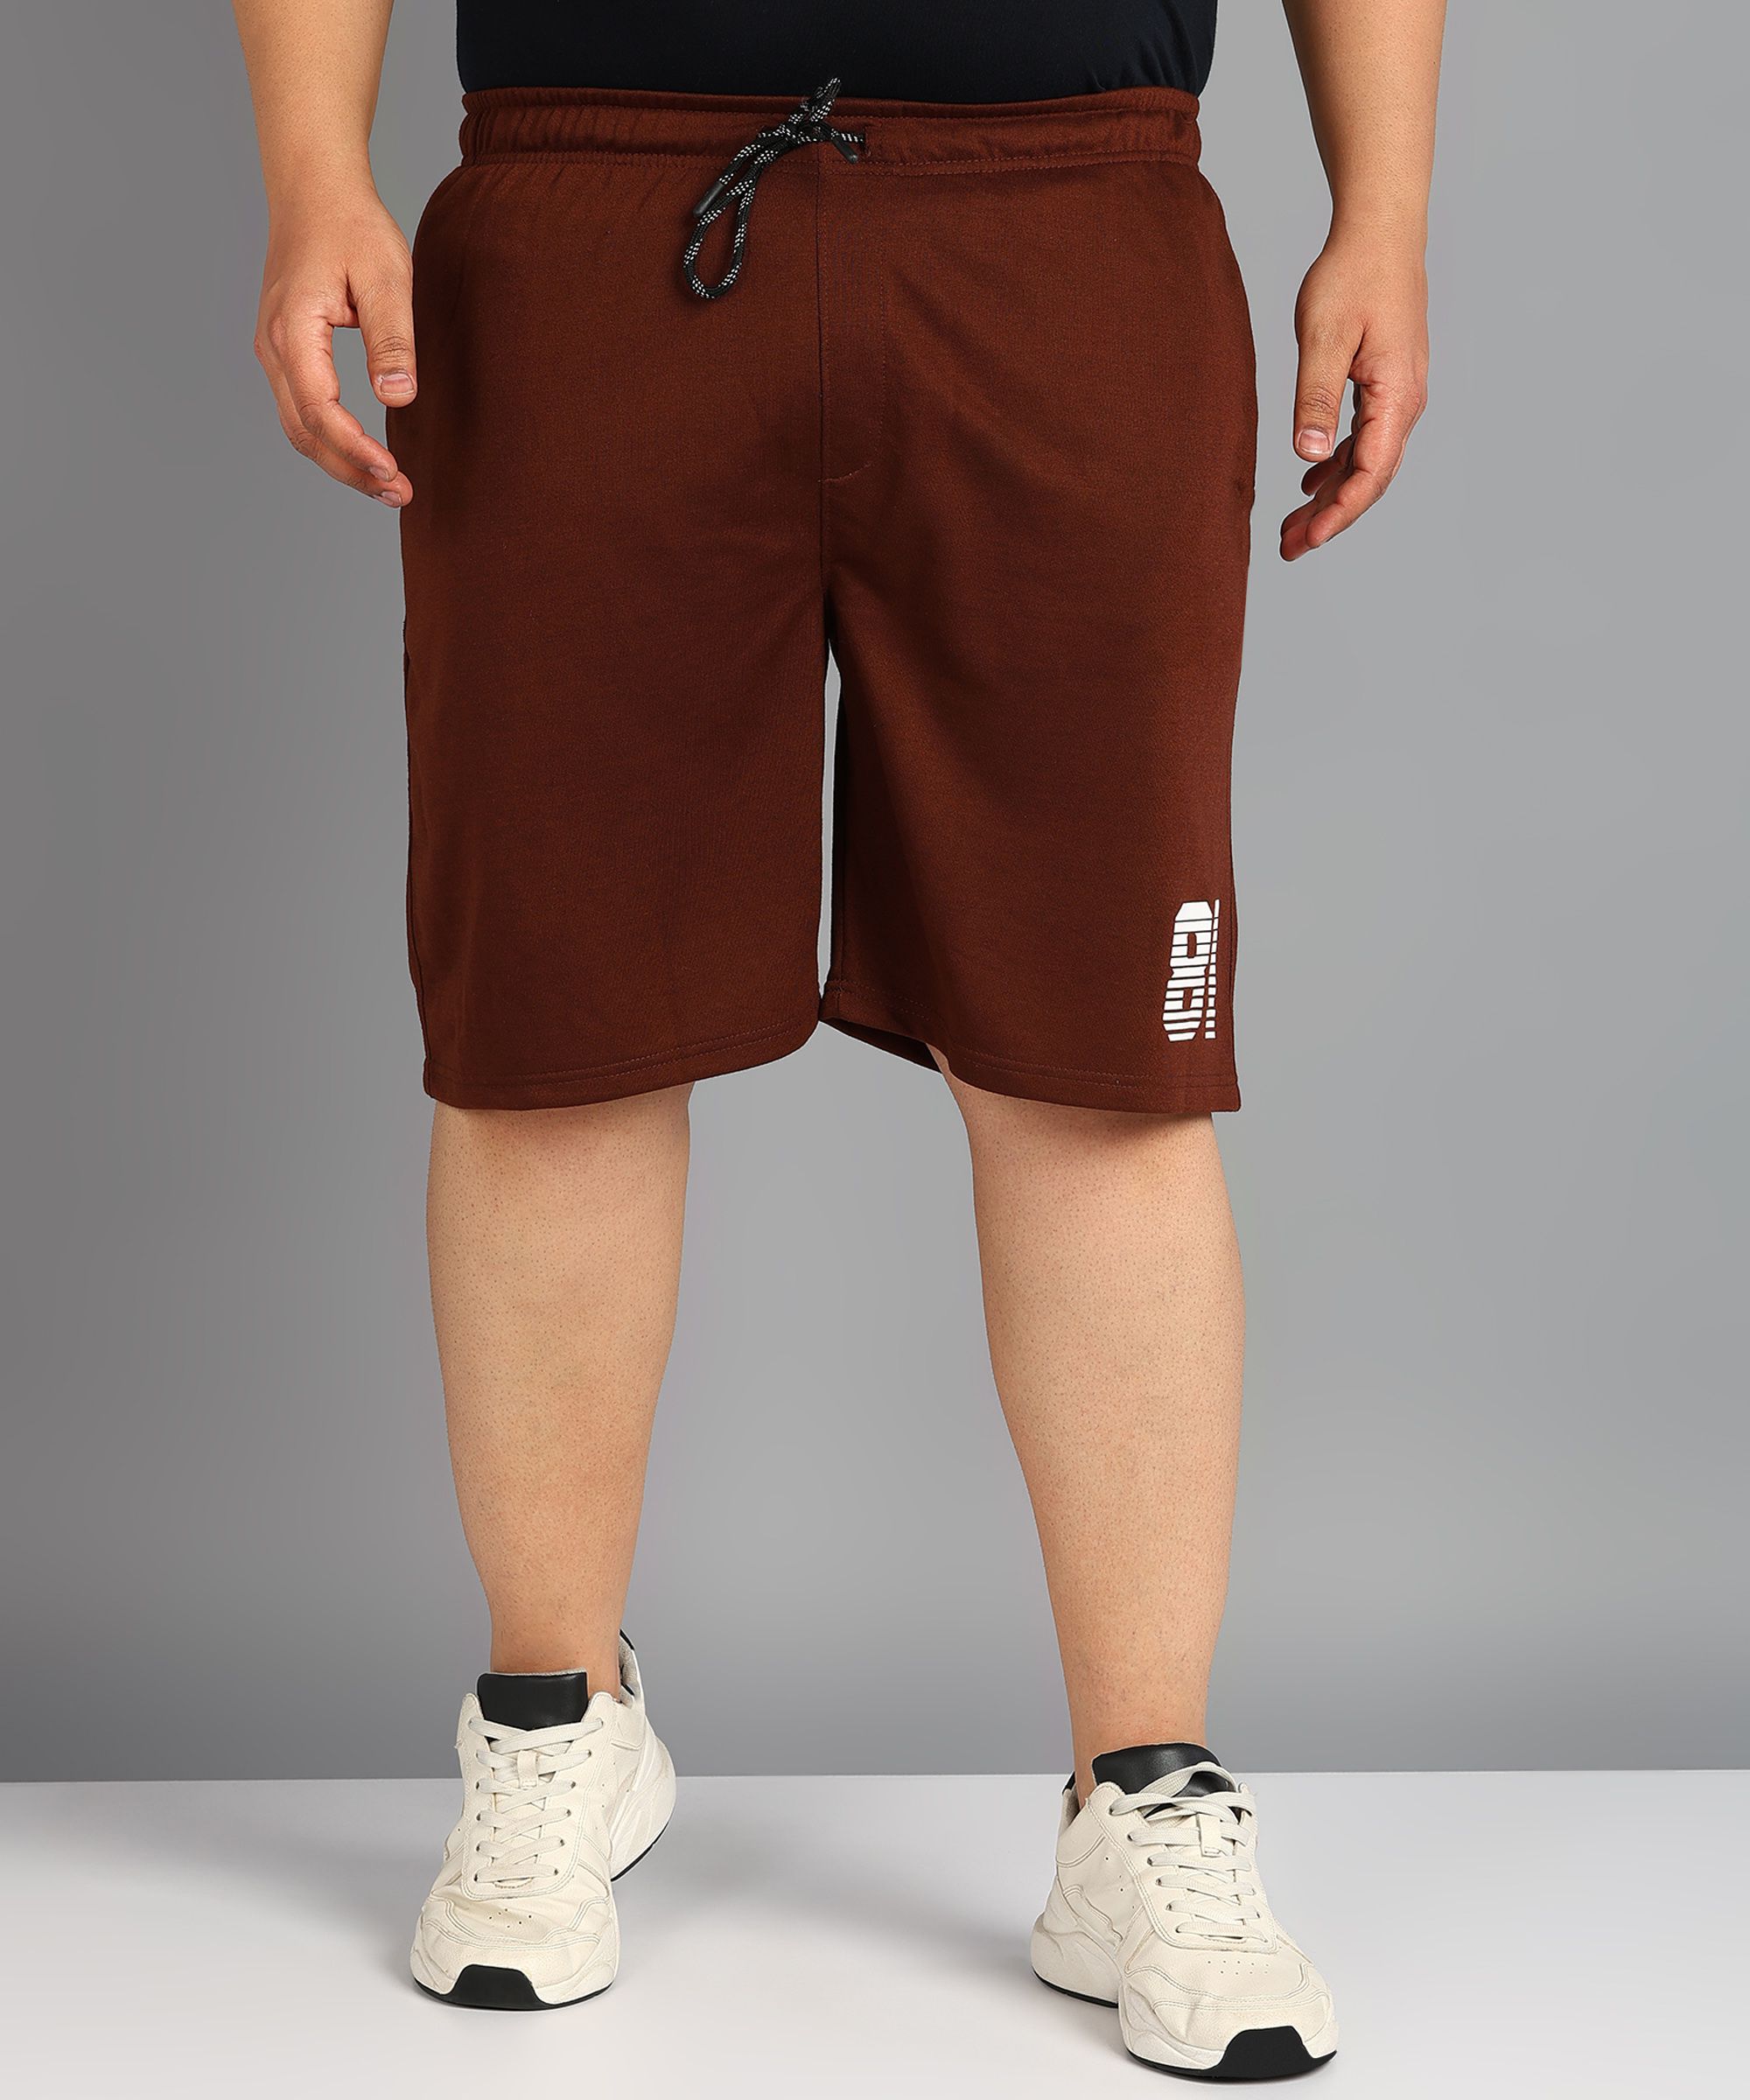     			XFOX Brown Blended Men's Shorts ( Pack of 1 )